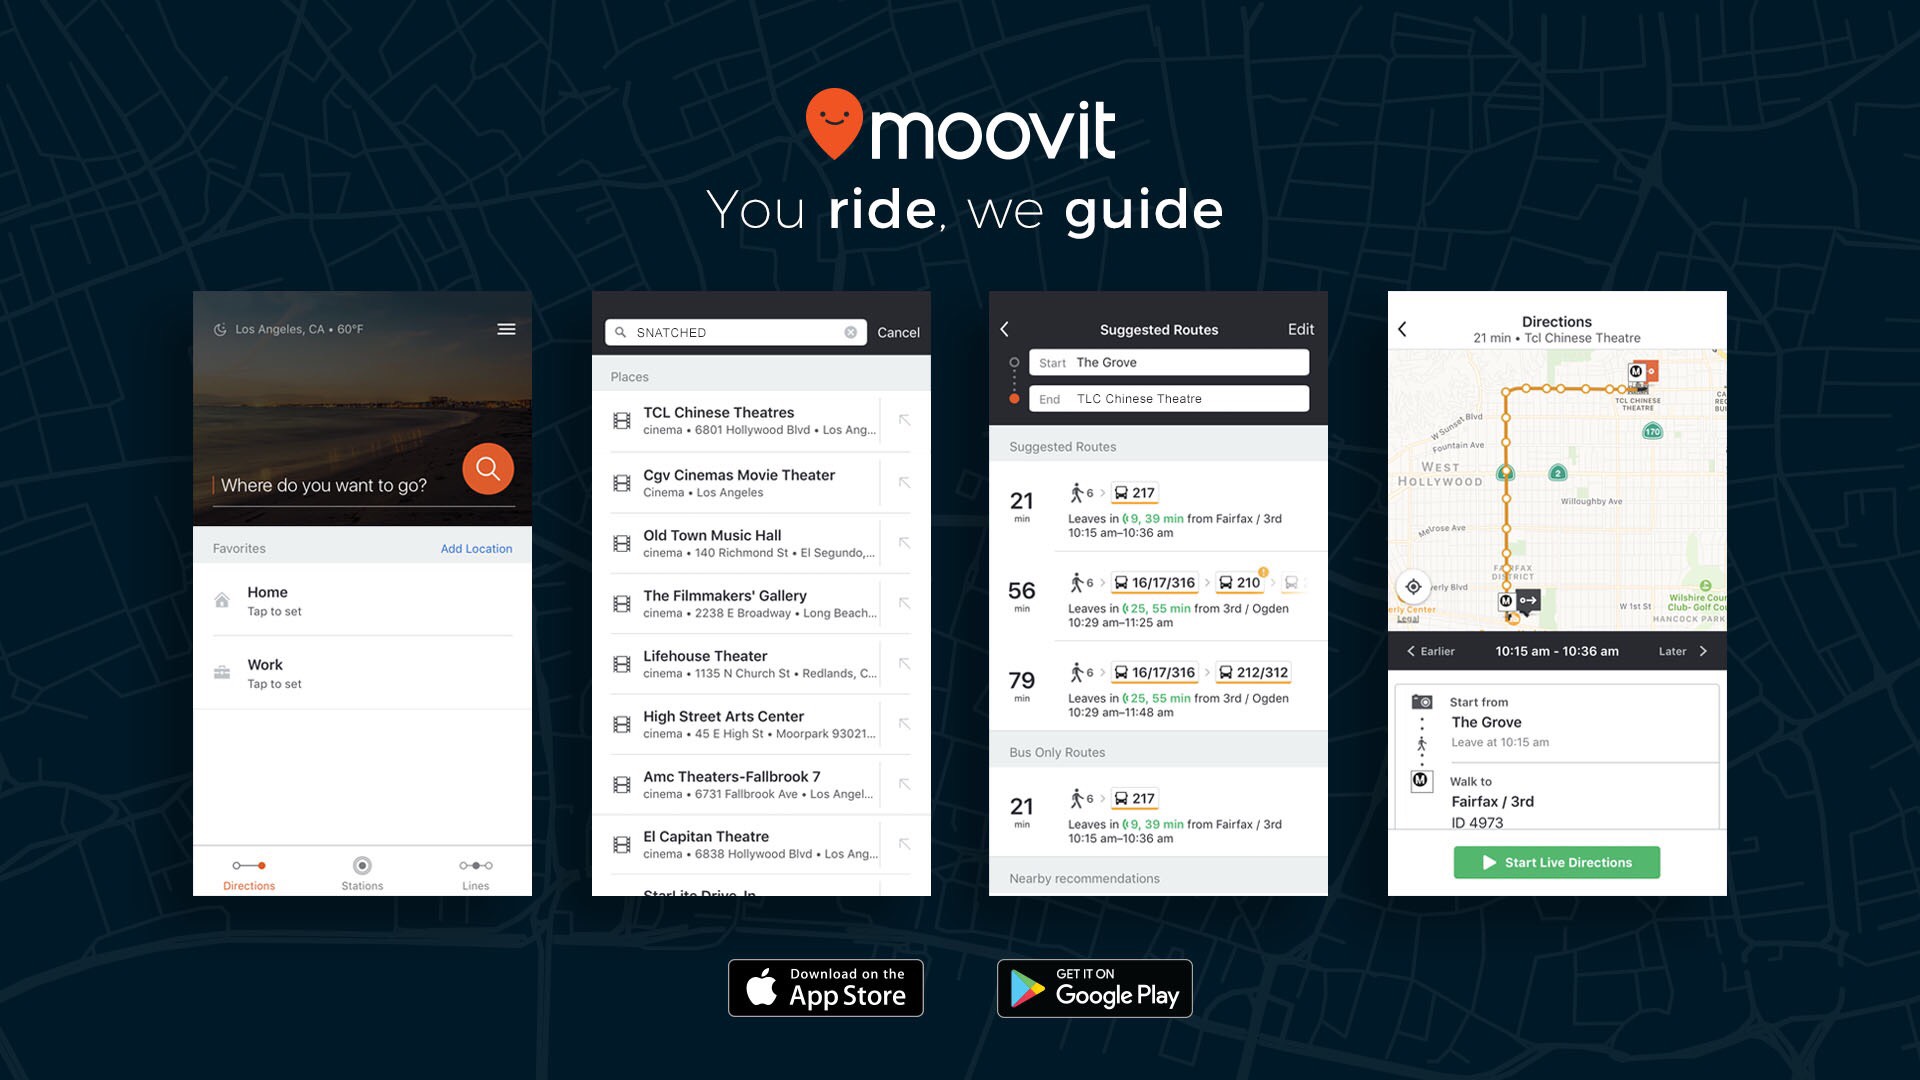 #Moovit #Snatched #movie #app #technology #ad